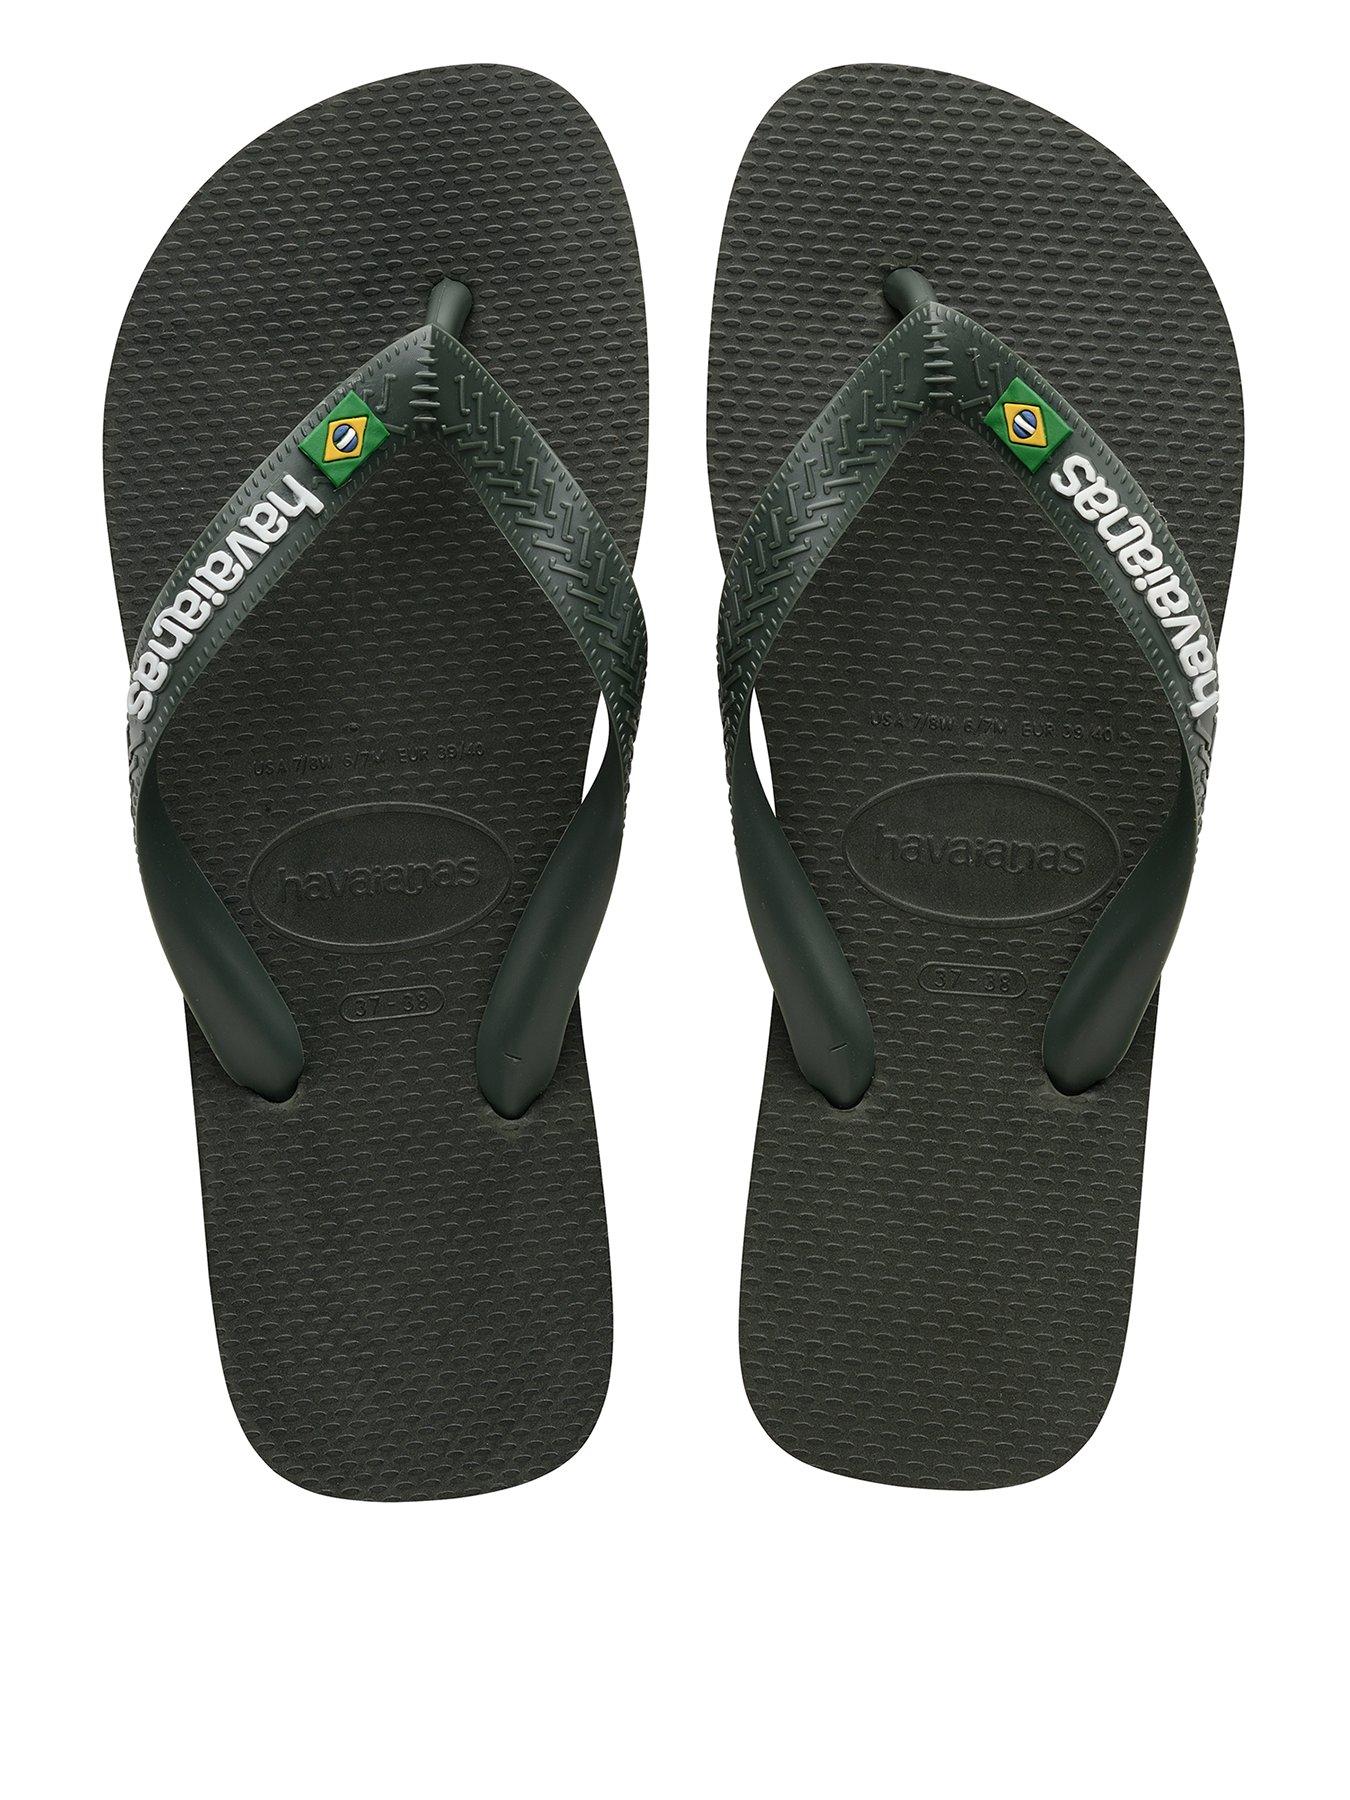 Havaianas Brasil Logo Flip Flop - Green, Green, Size 6-7, Men